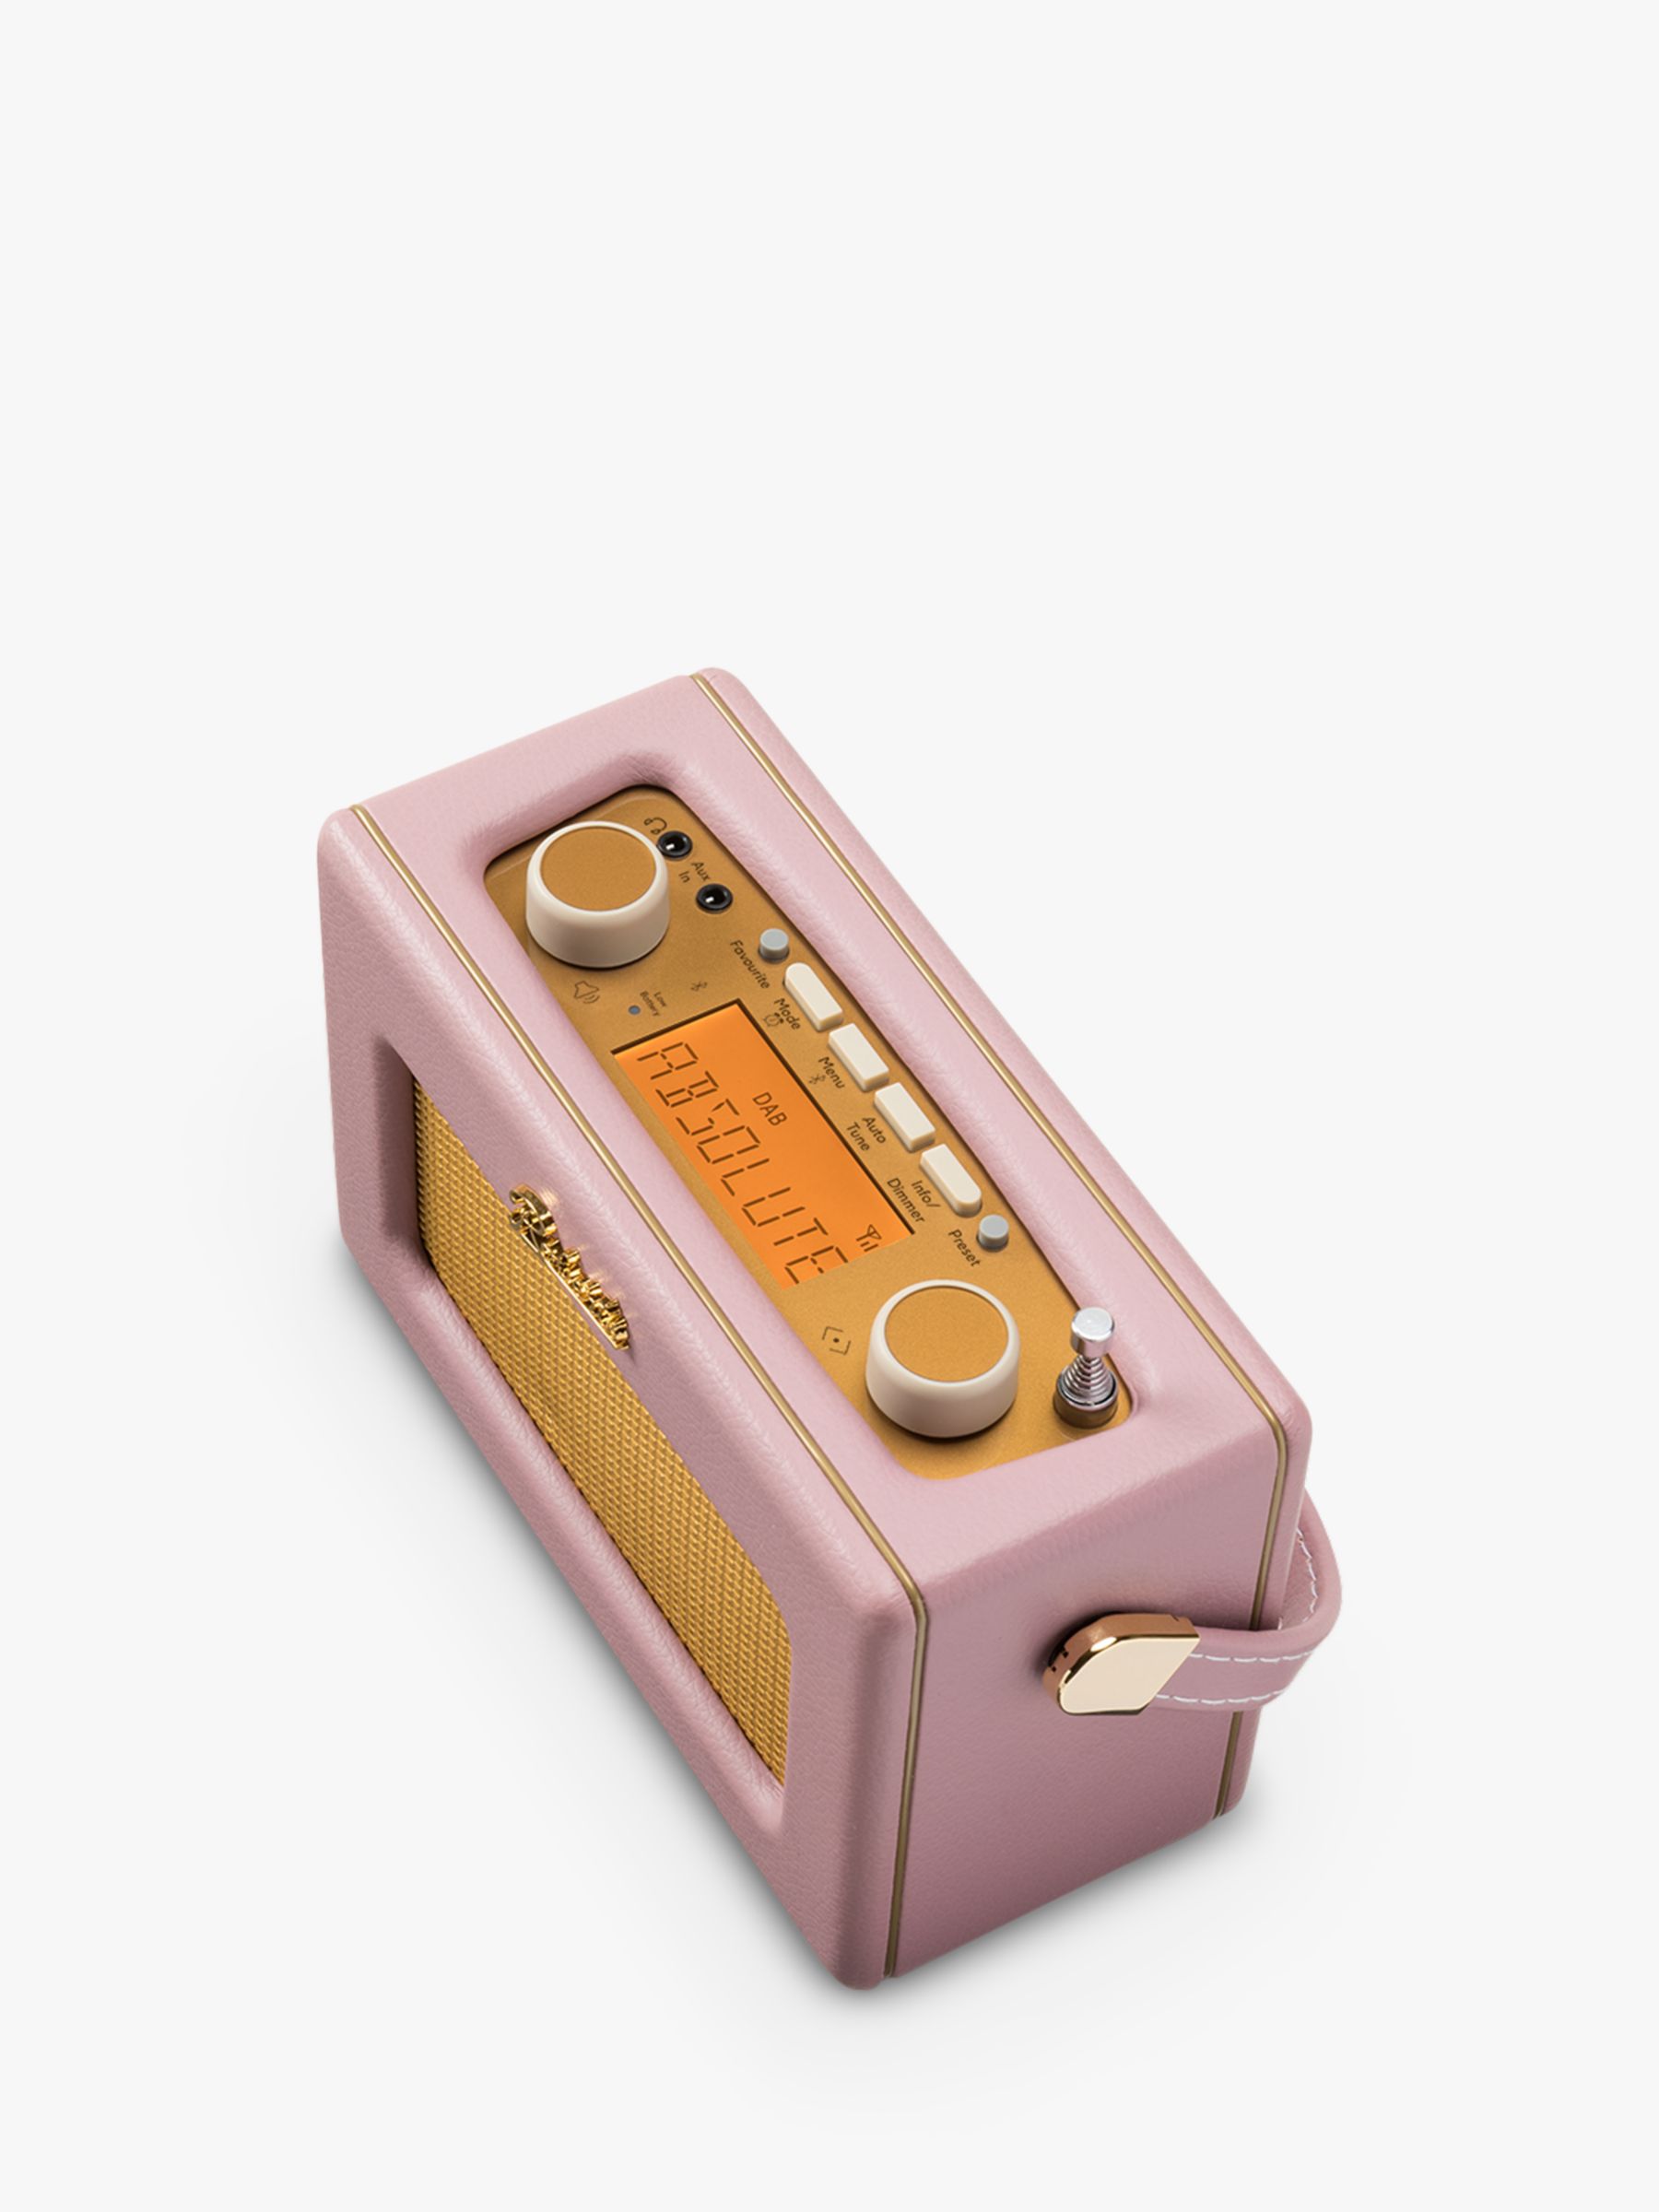 DAB/DAB+/FM Uno Digital Pastel Cream Revival BT Bluetooth Radio Roberts with Alarm,